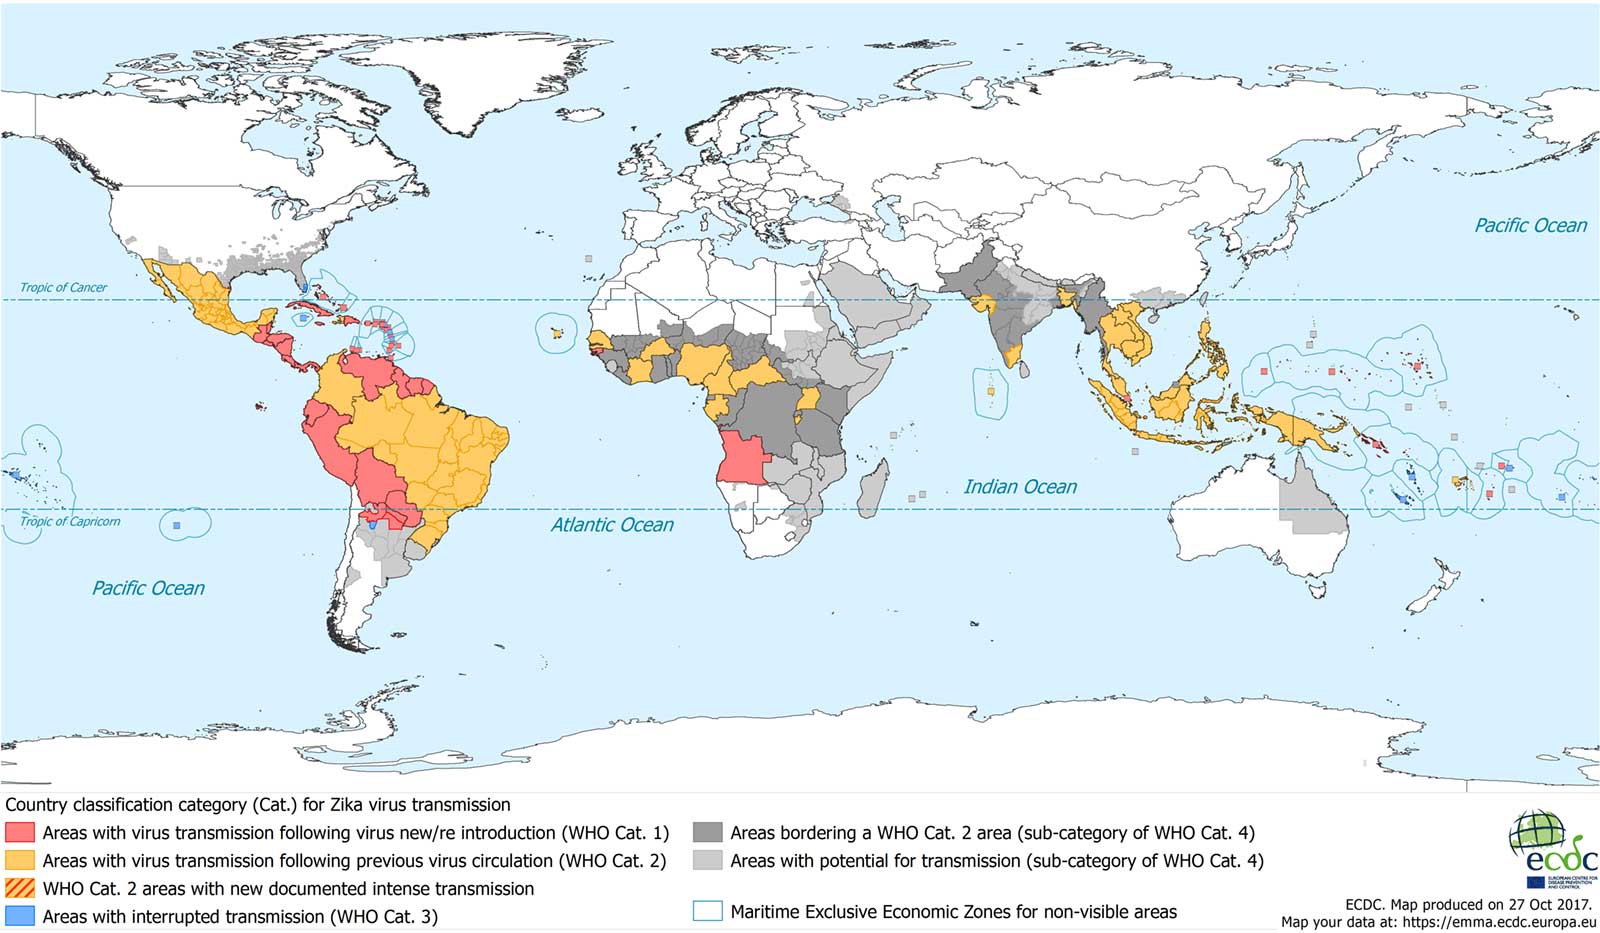 Ausbreitung des Zika-Virus